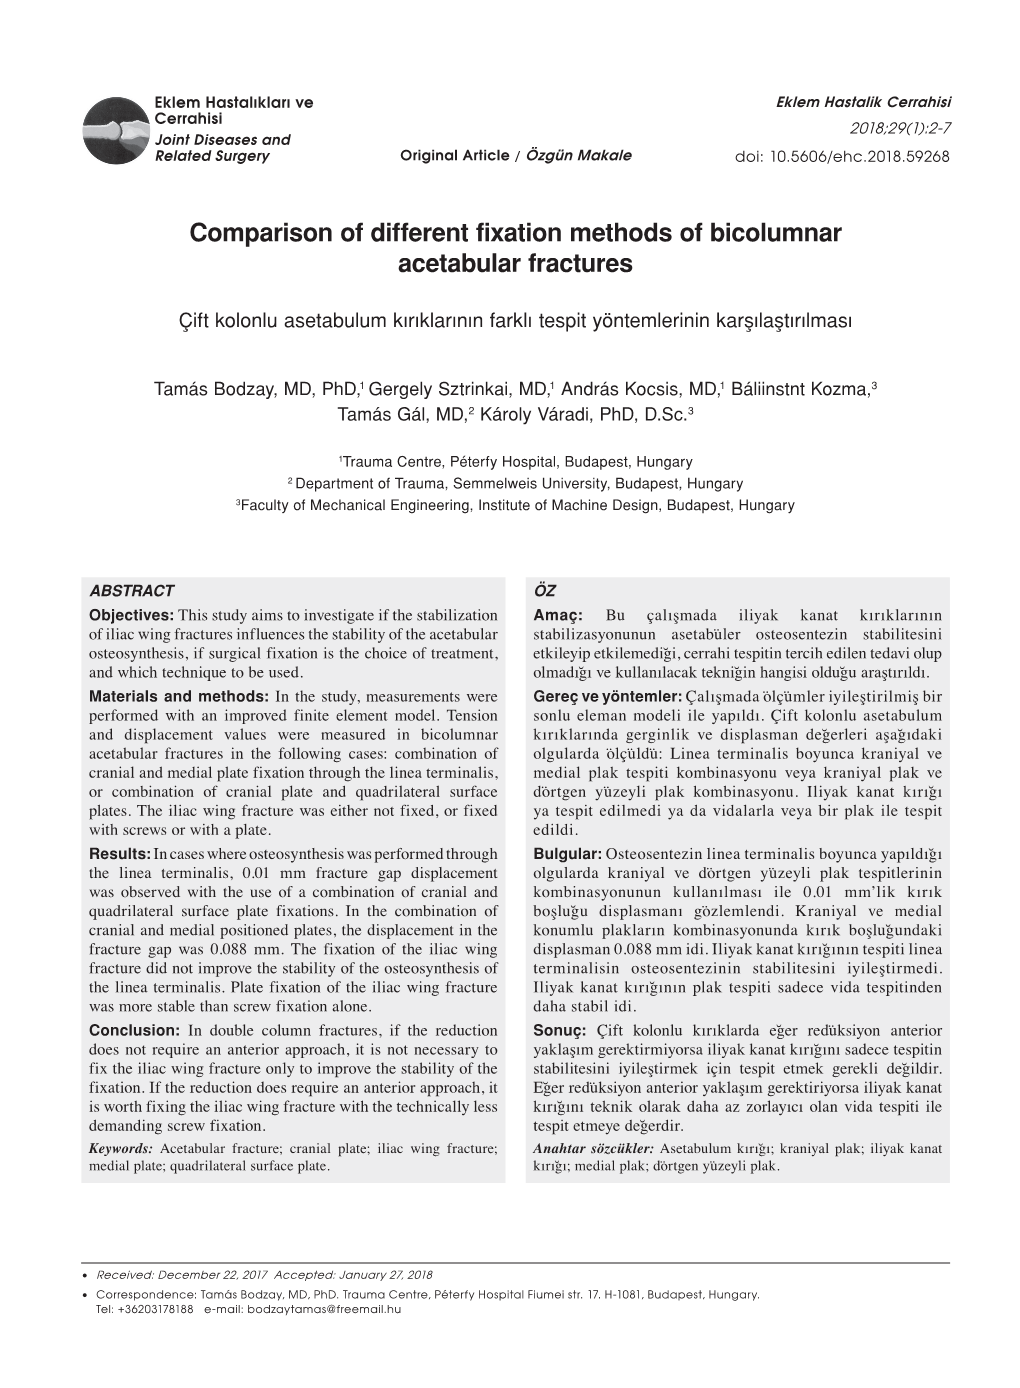 Comparison of Different Fixation Methods of Bicolumnar Acetabular Fractures